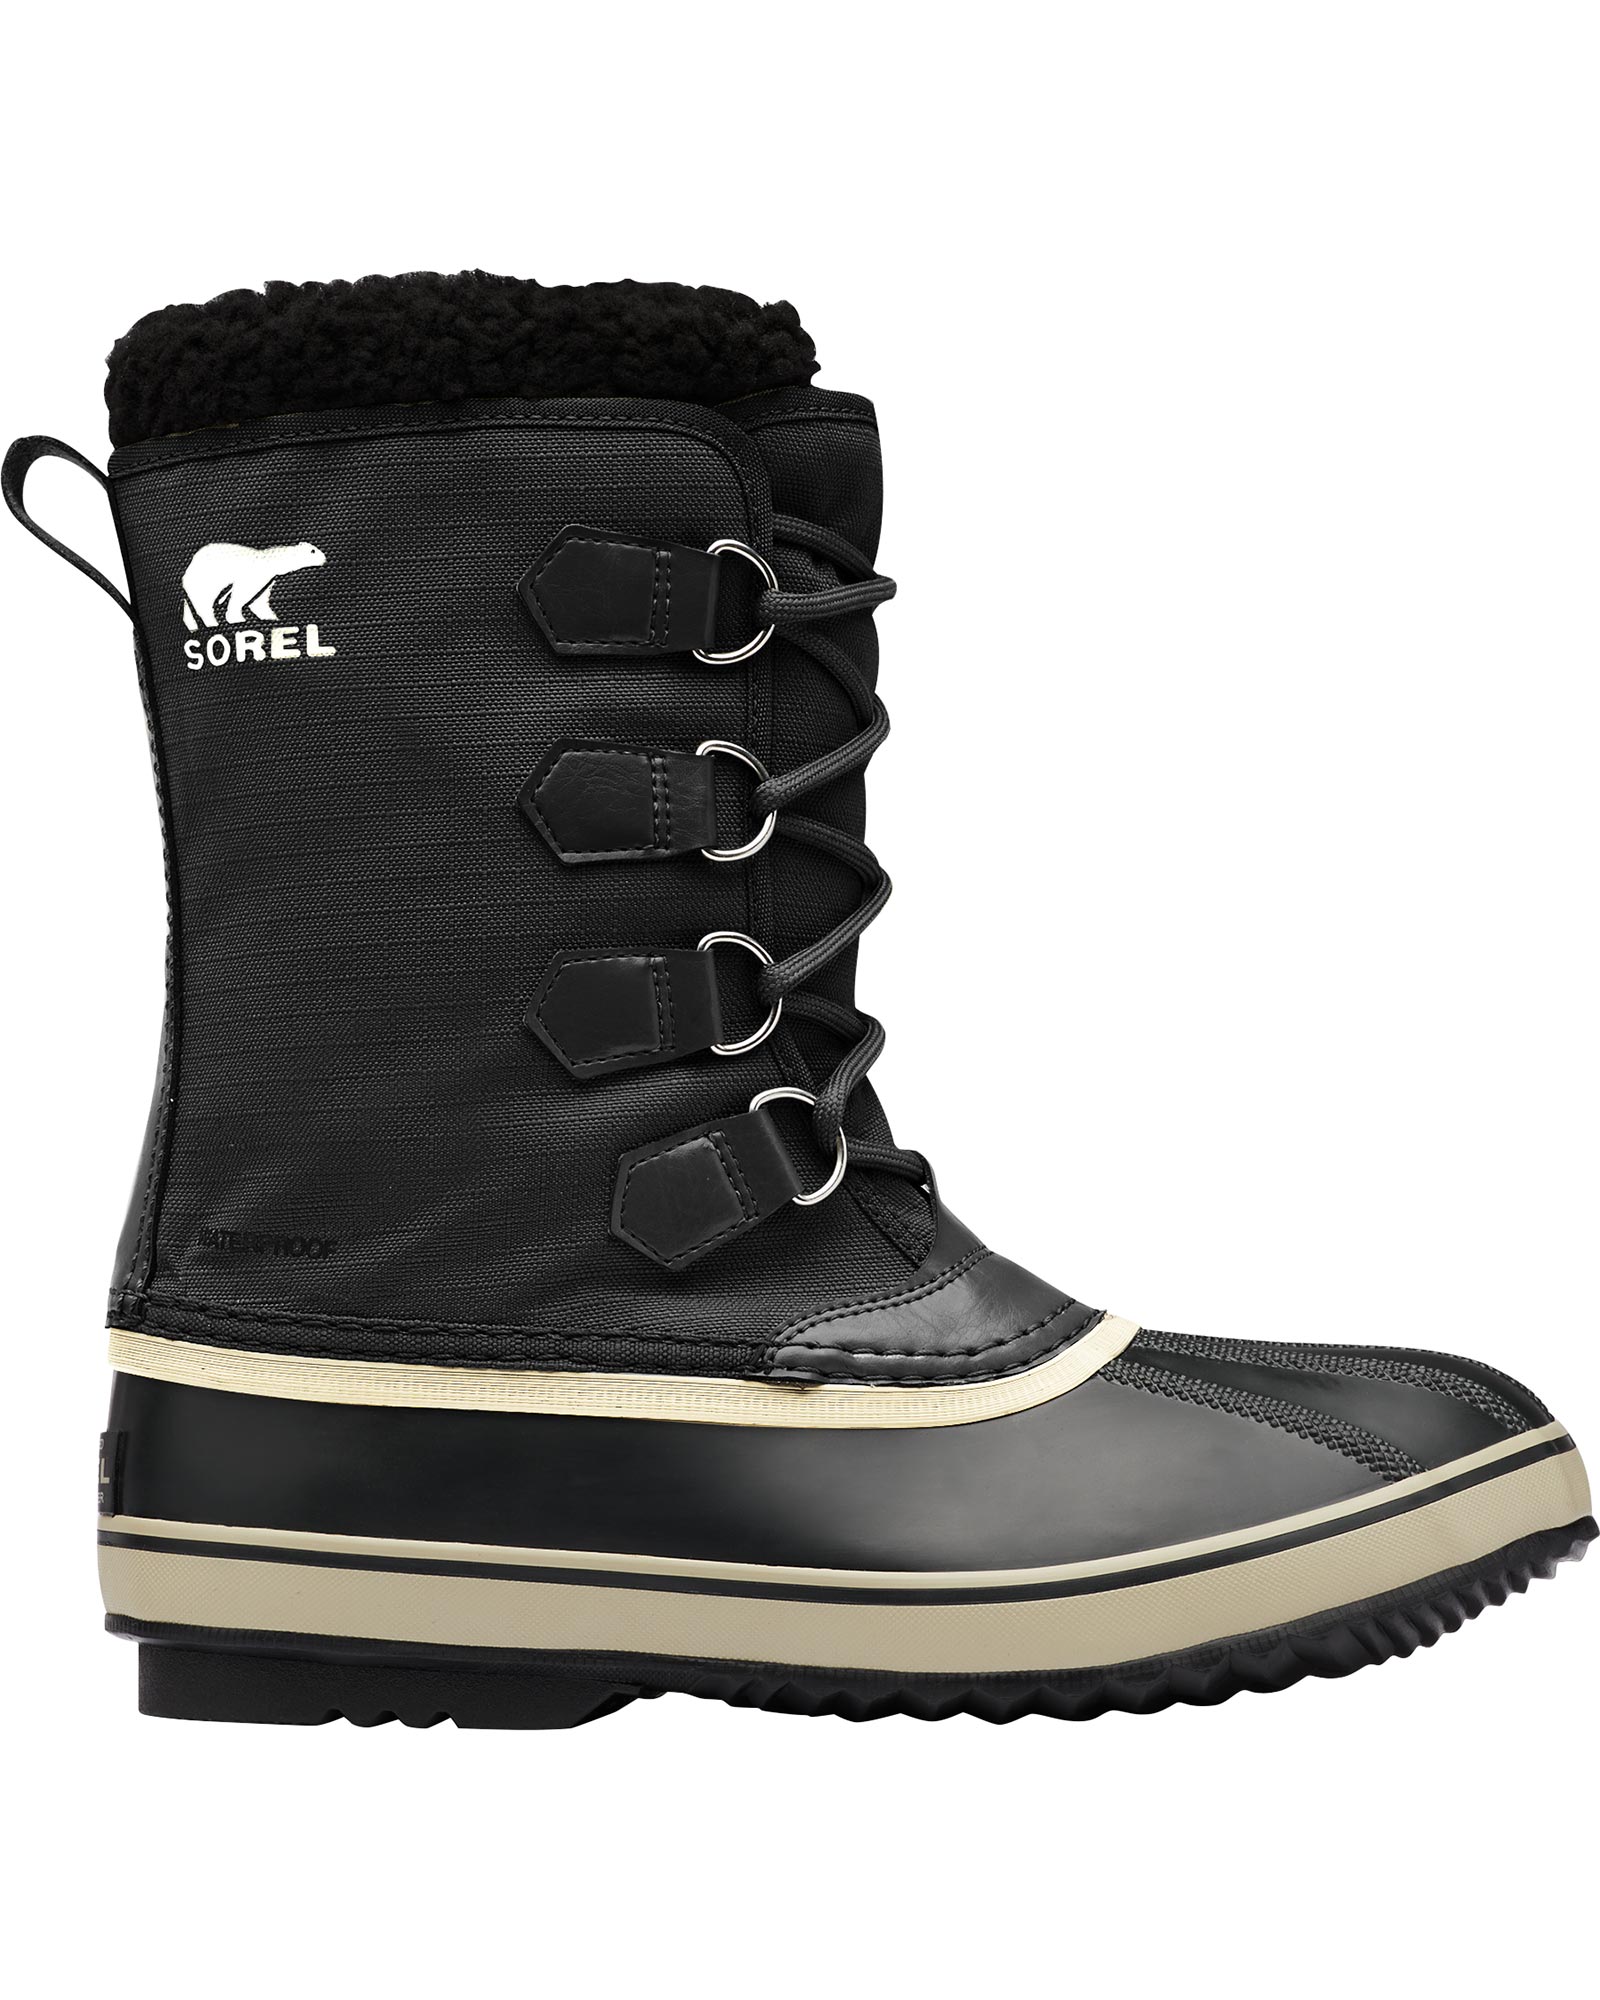 Sorel 1964 Pac Nylon Men’s Snow Boots - black UK 7